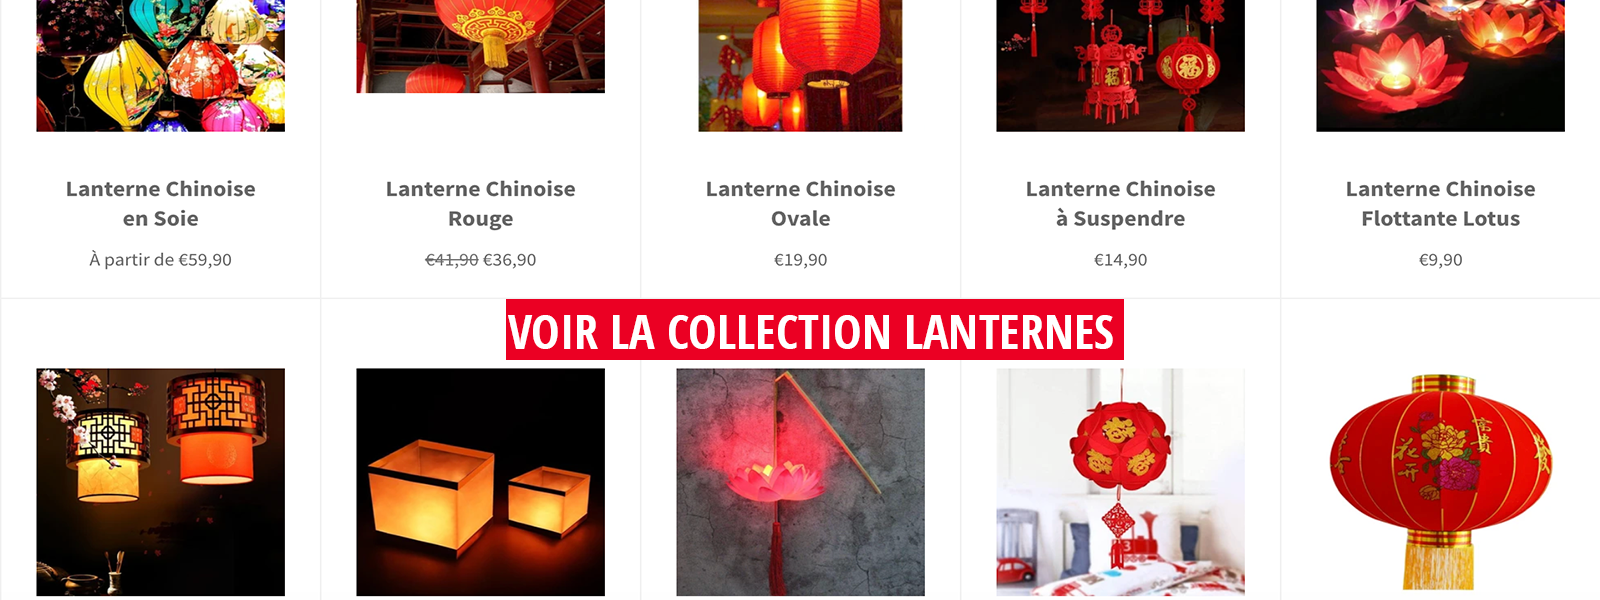 collection lanterne